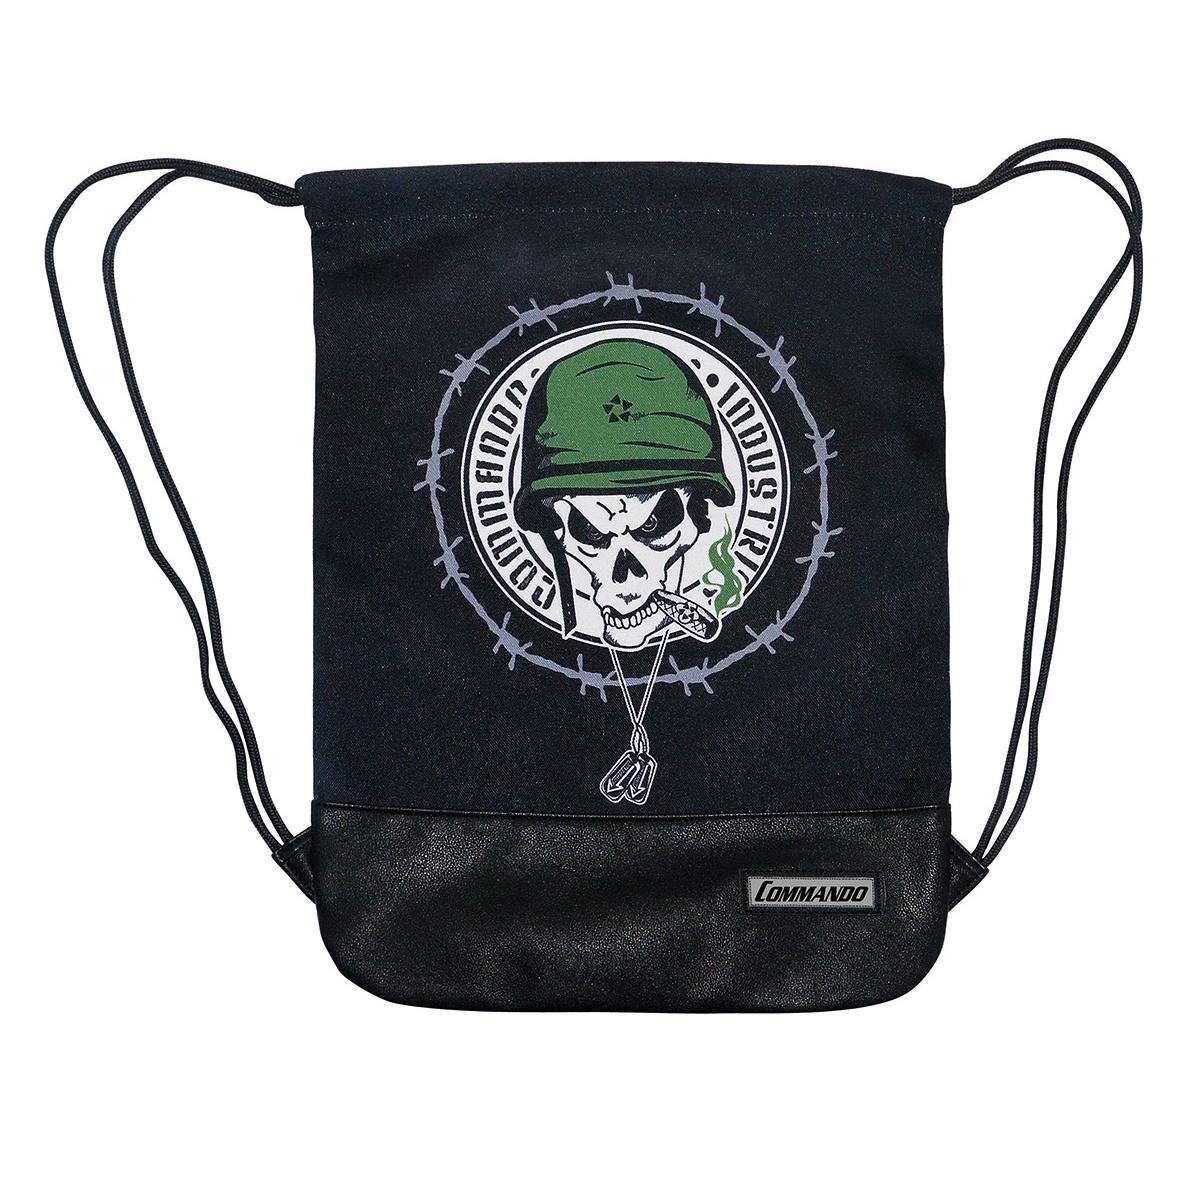 Commando Soldat Turnbeutel Gym Bag